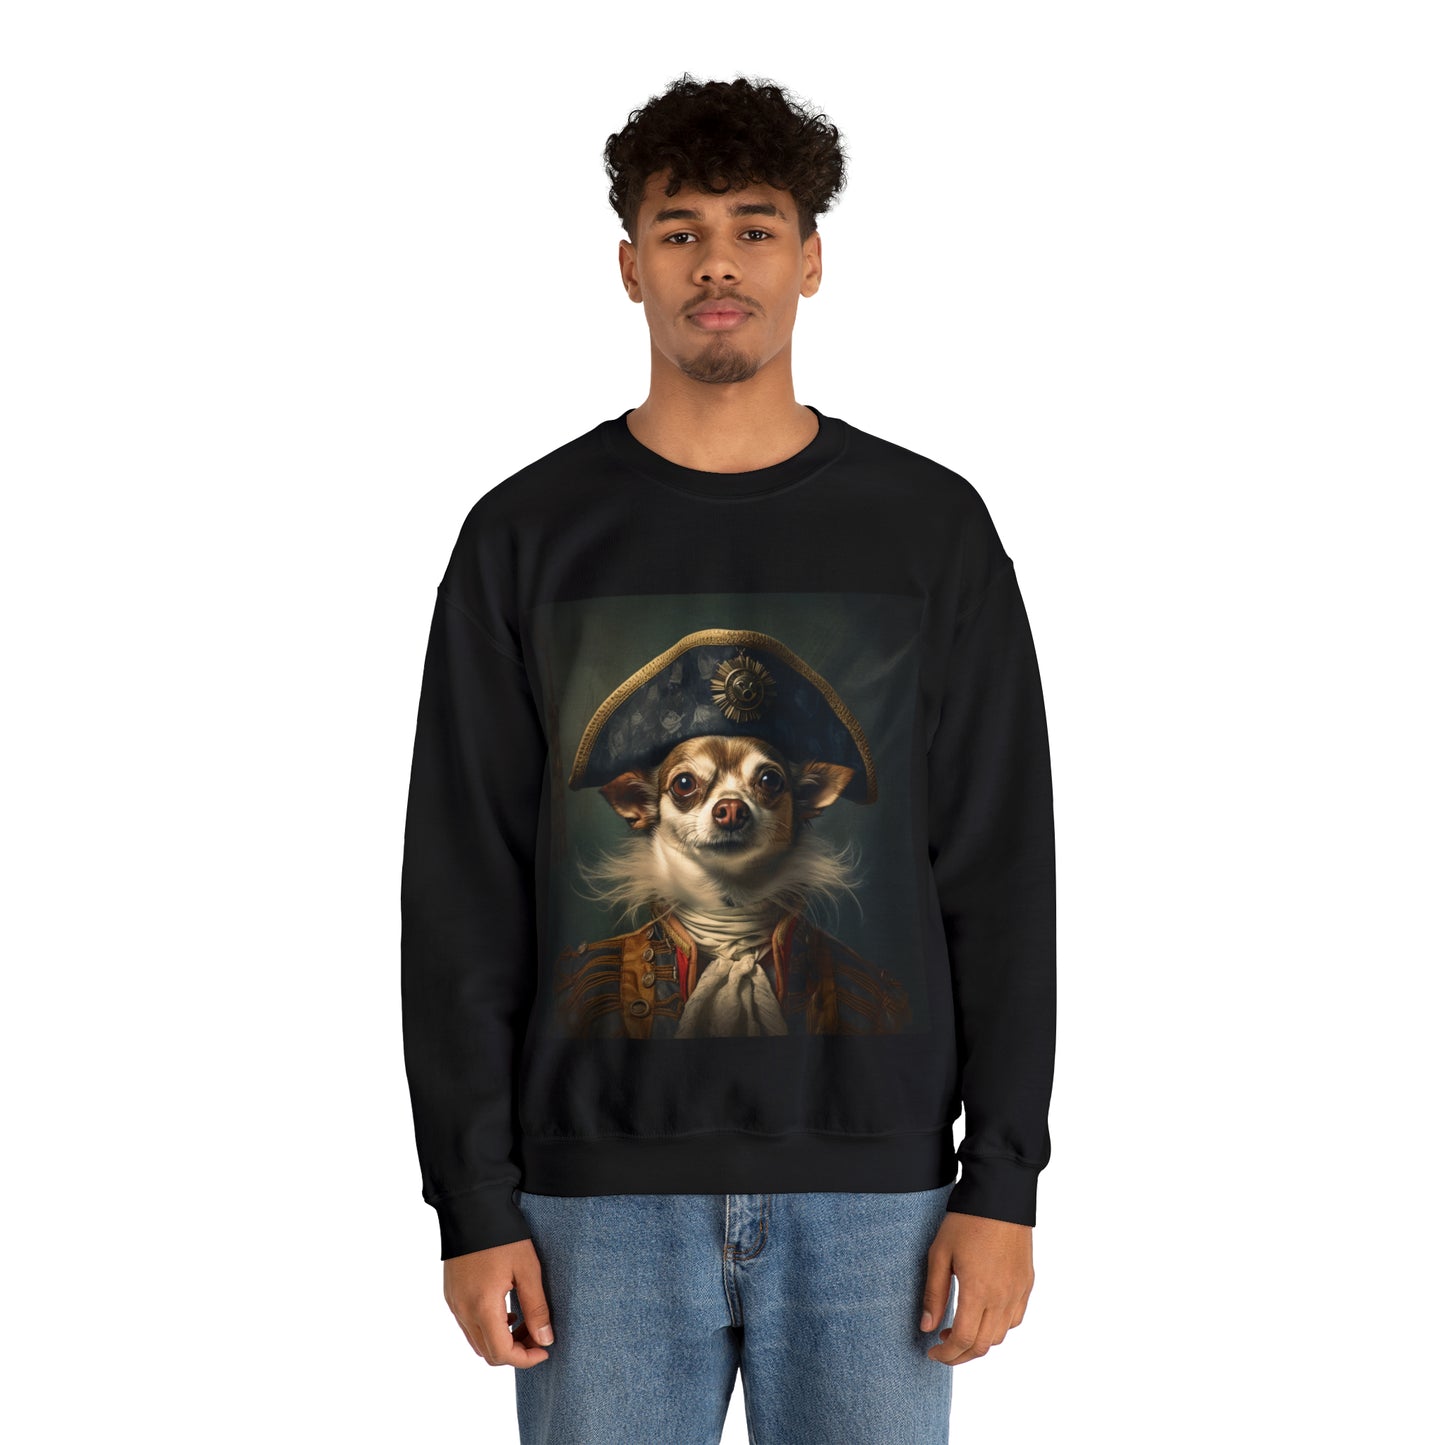 Chihuahua - 17th Century Pirate - Pet Portrait Unisex Crewneck Sweatshirt